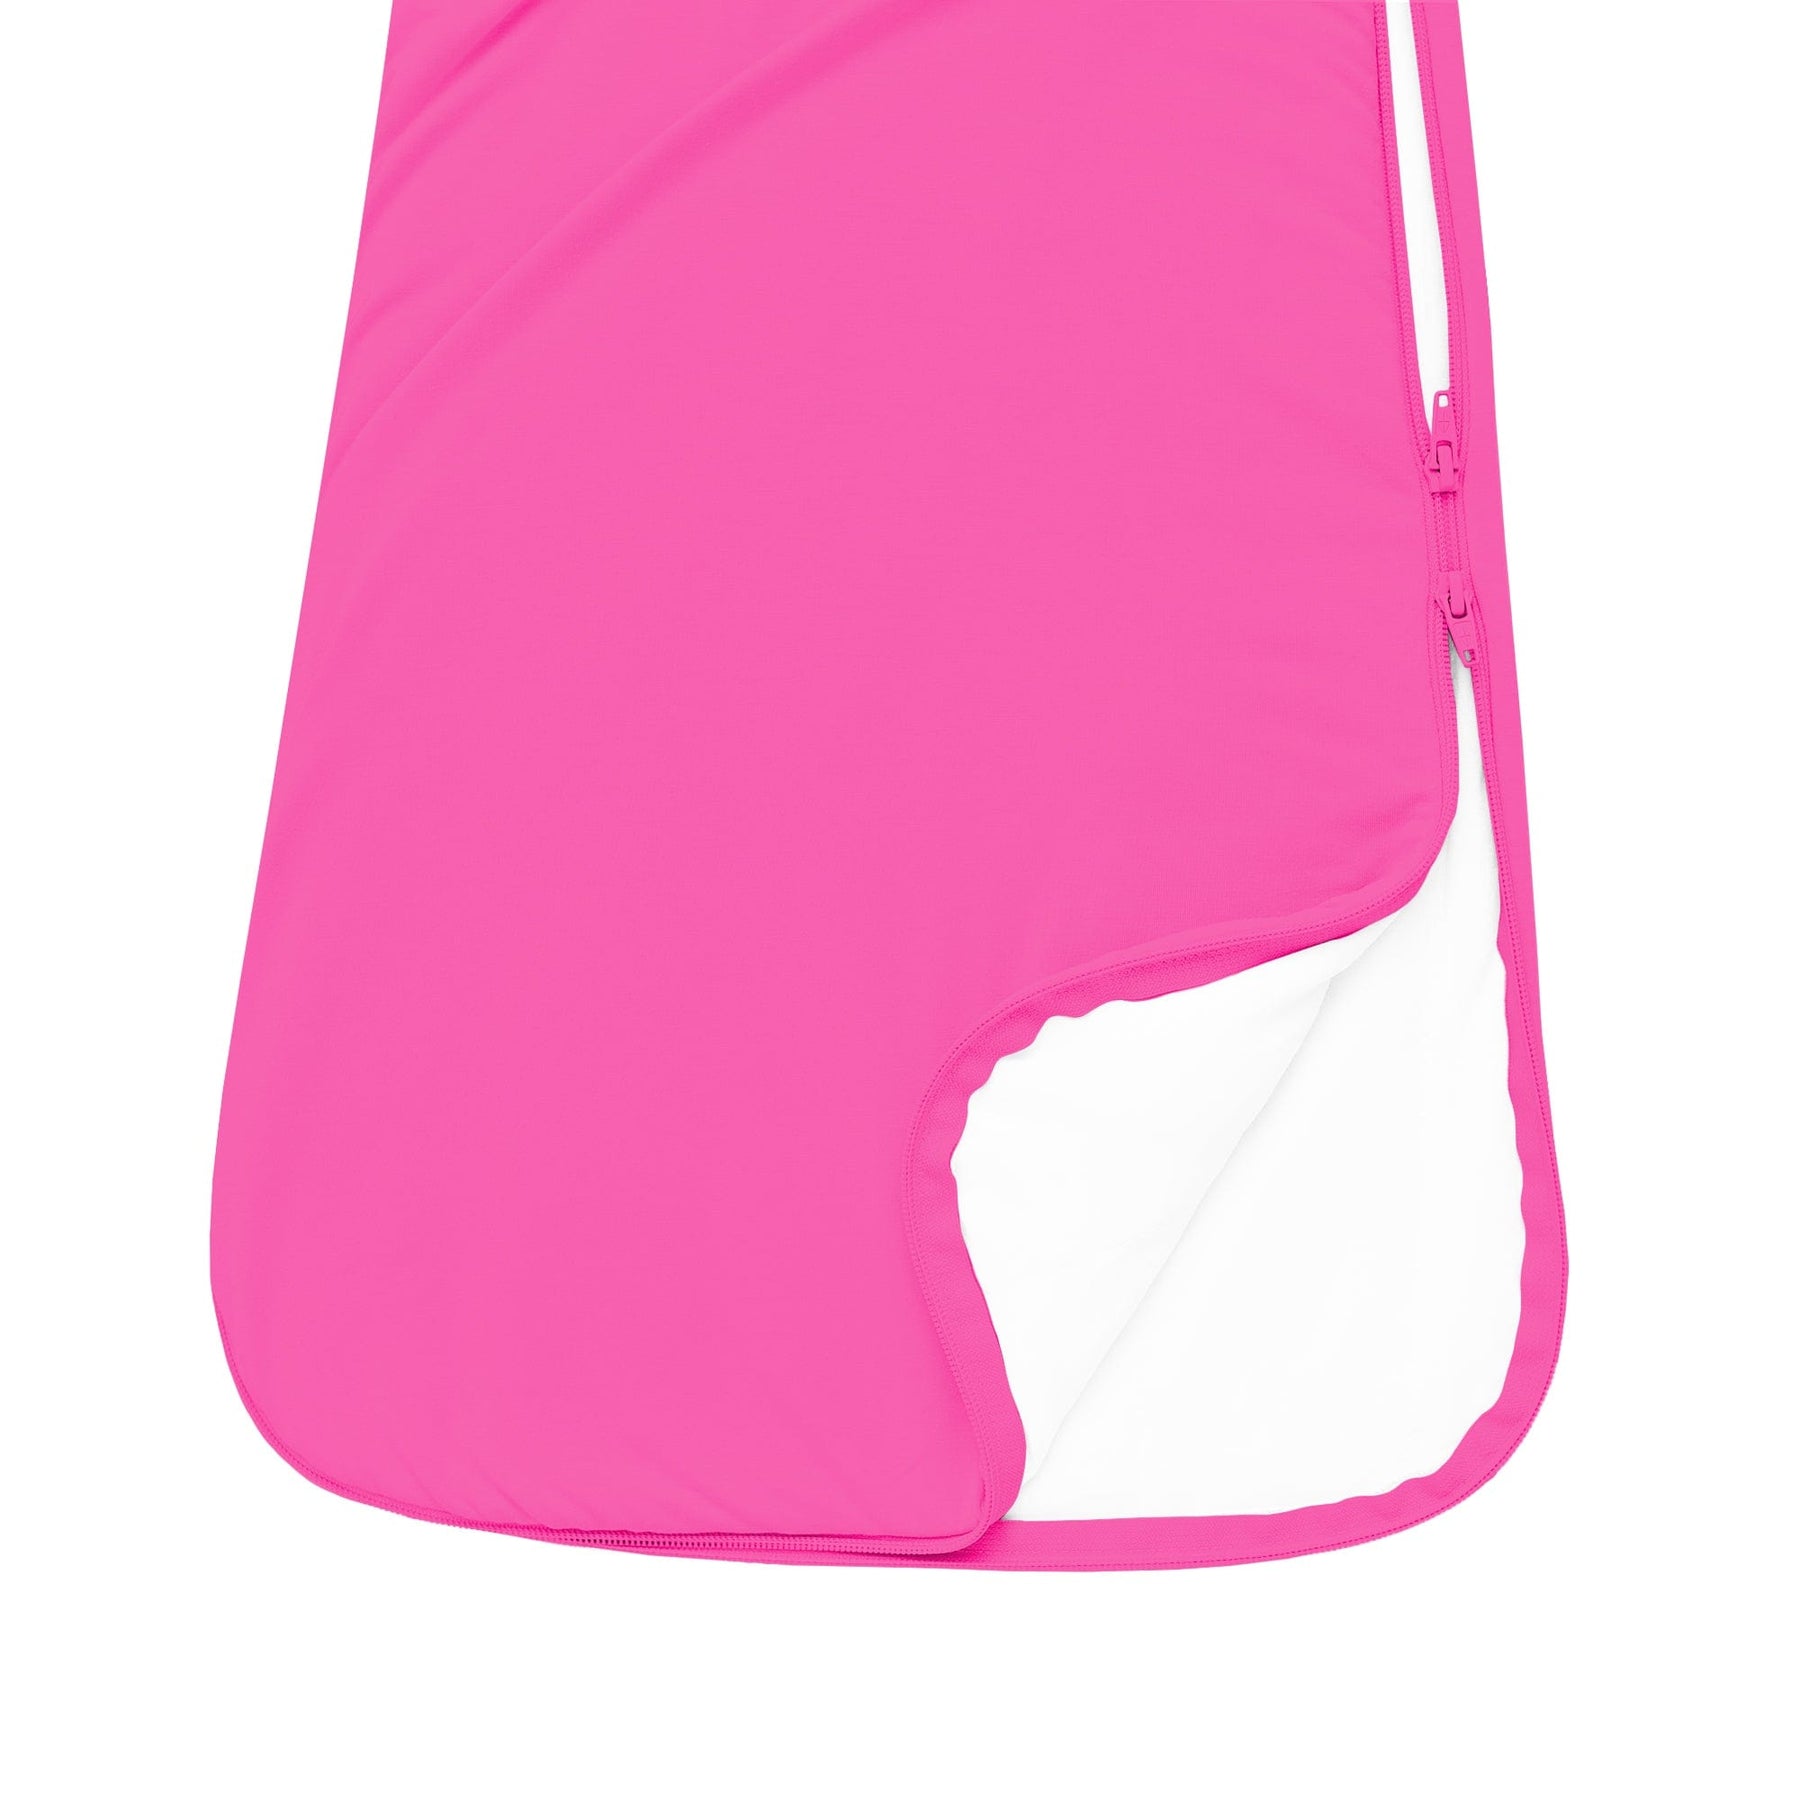 Kyte Baby Sleep Bag 1.0 Tog Sleep Bag in Raspberry 1.0